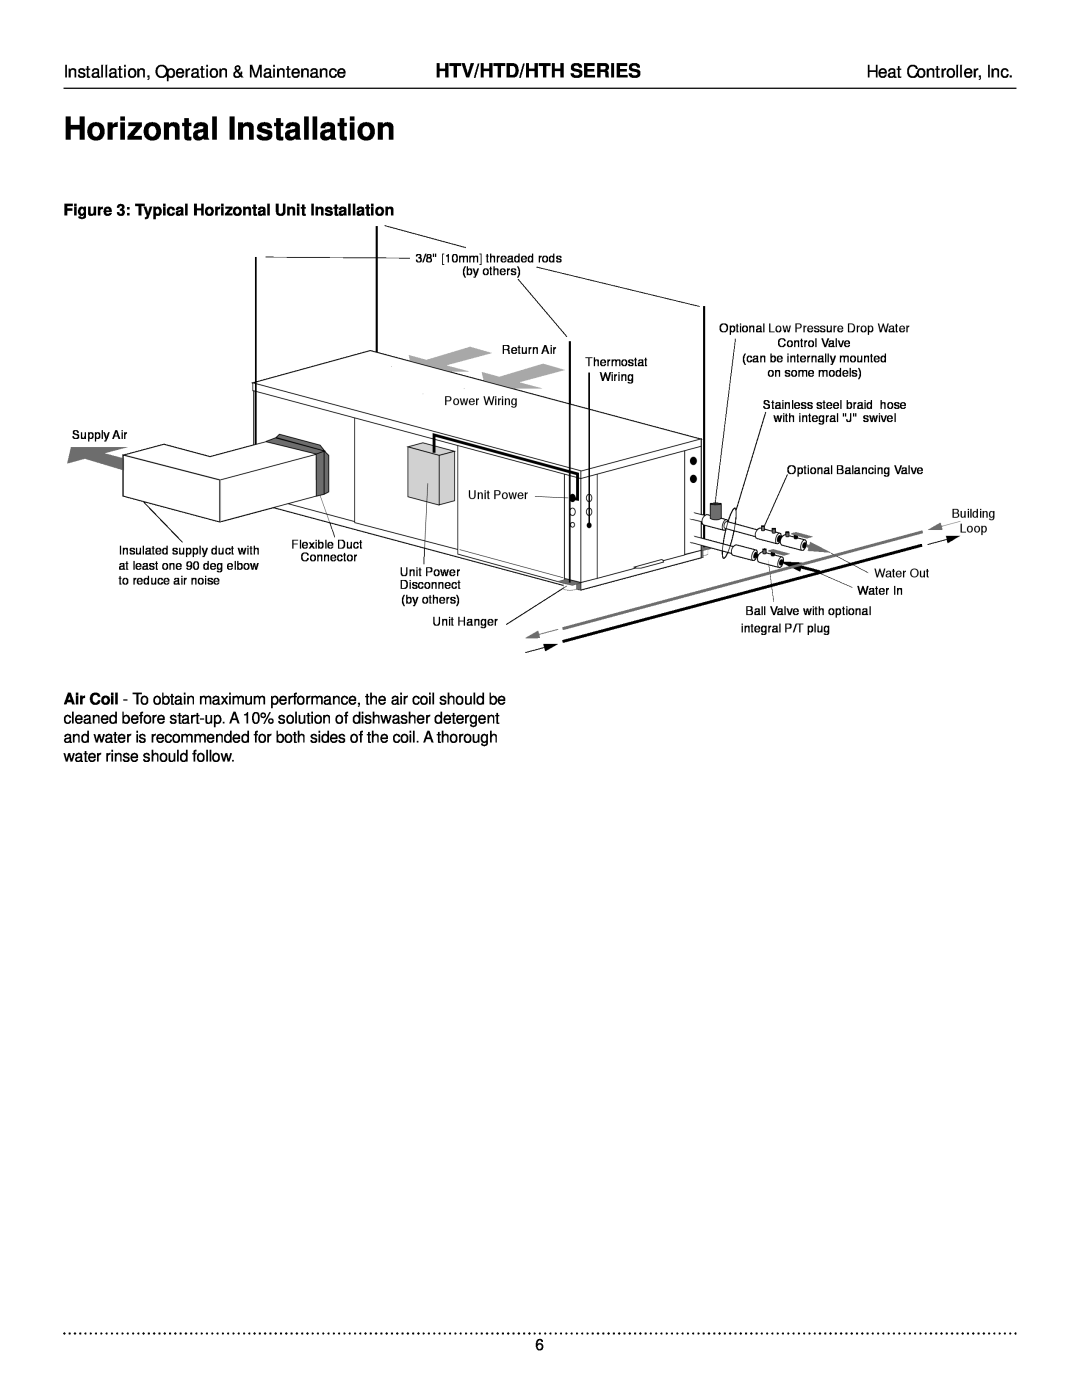 Heat Controller HTV, HTH, HTD manual Horizontal Installation, Htv/Htd/Hth Series, Installation, Operation & Maintenance 